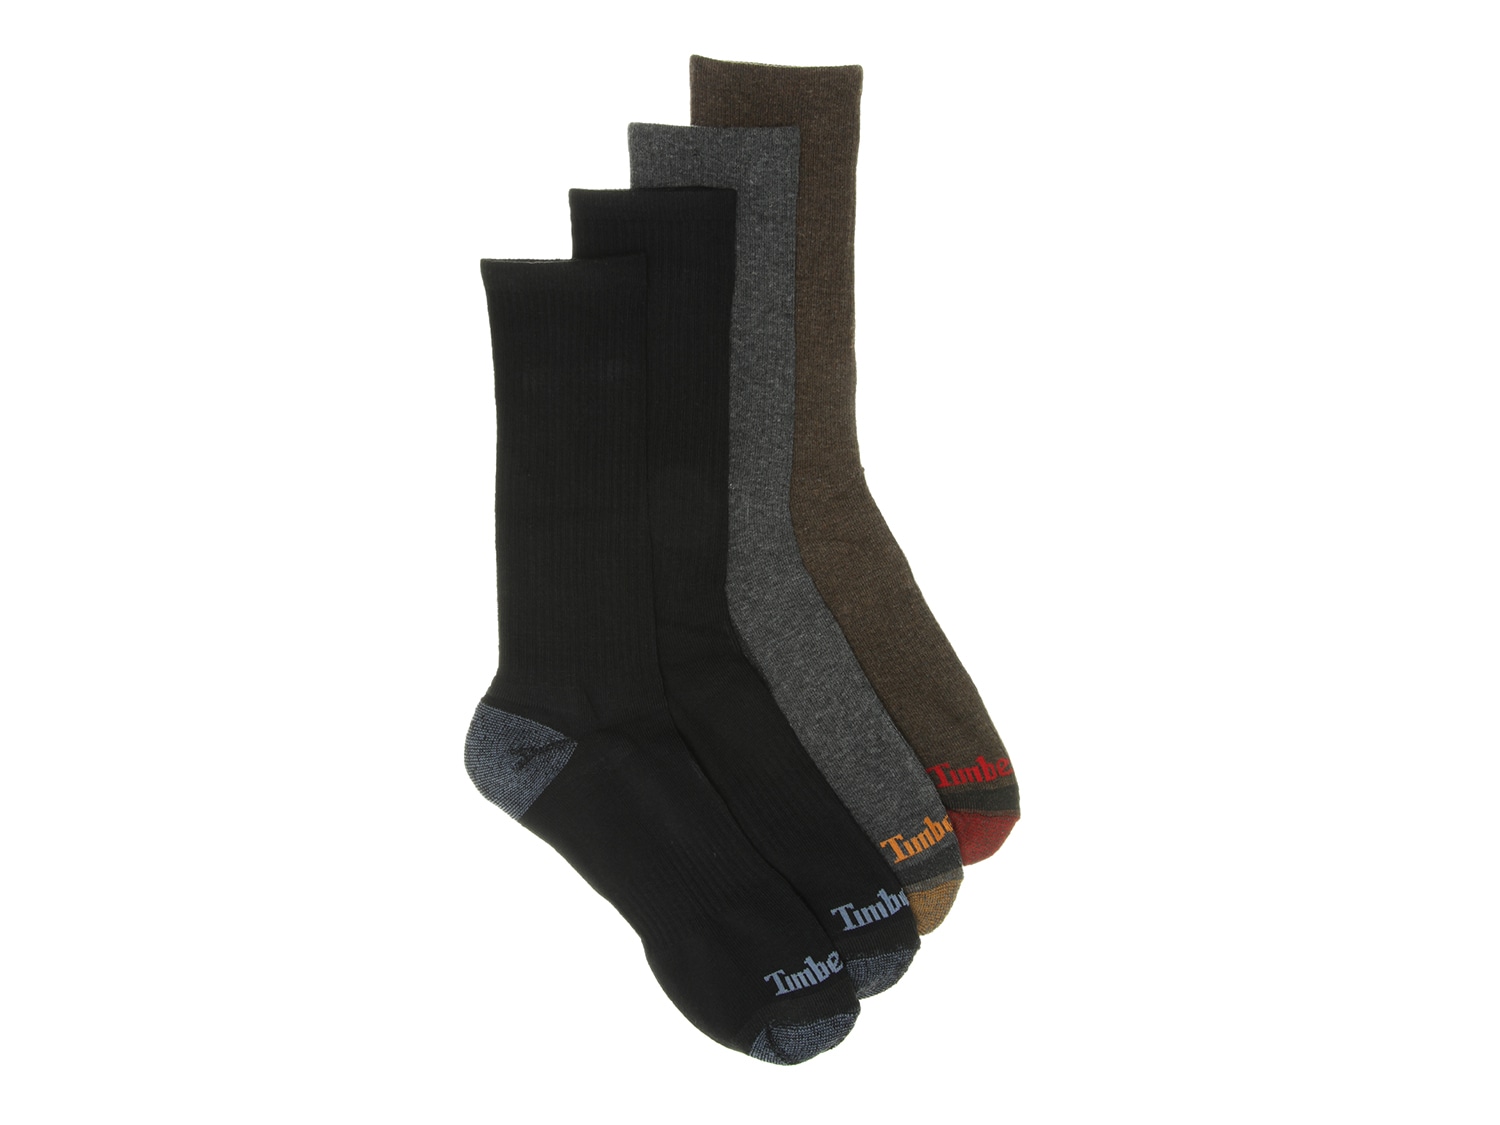 mezcla Contemporáneo Gallina Timberland Comfort Men's Boot Crew Socks - 4 Pack - Free Shipping | DSW